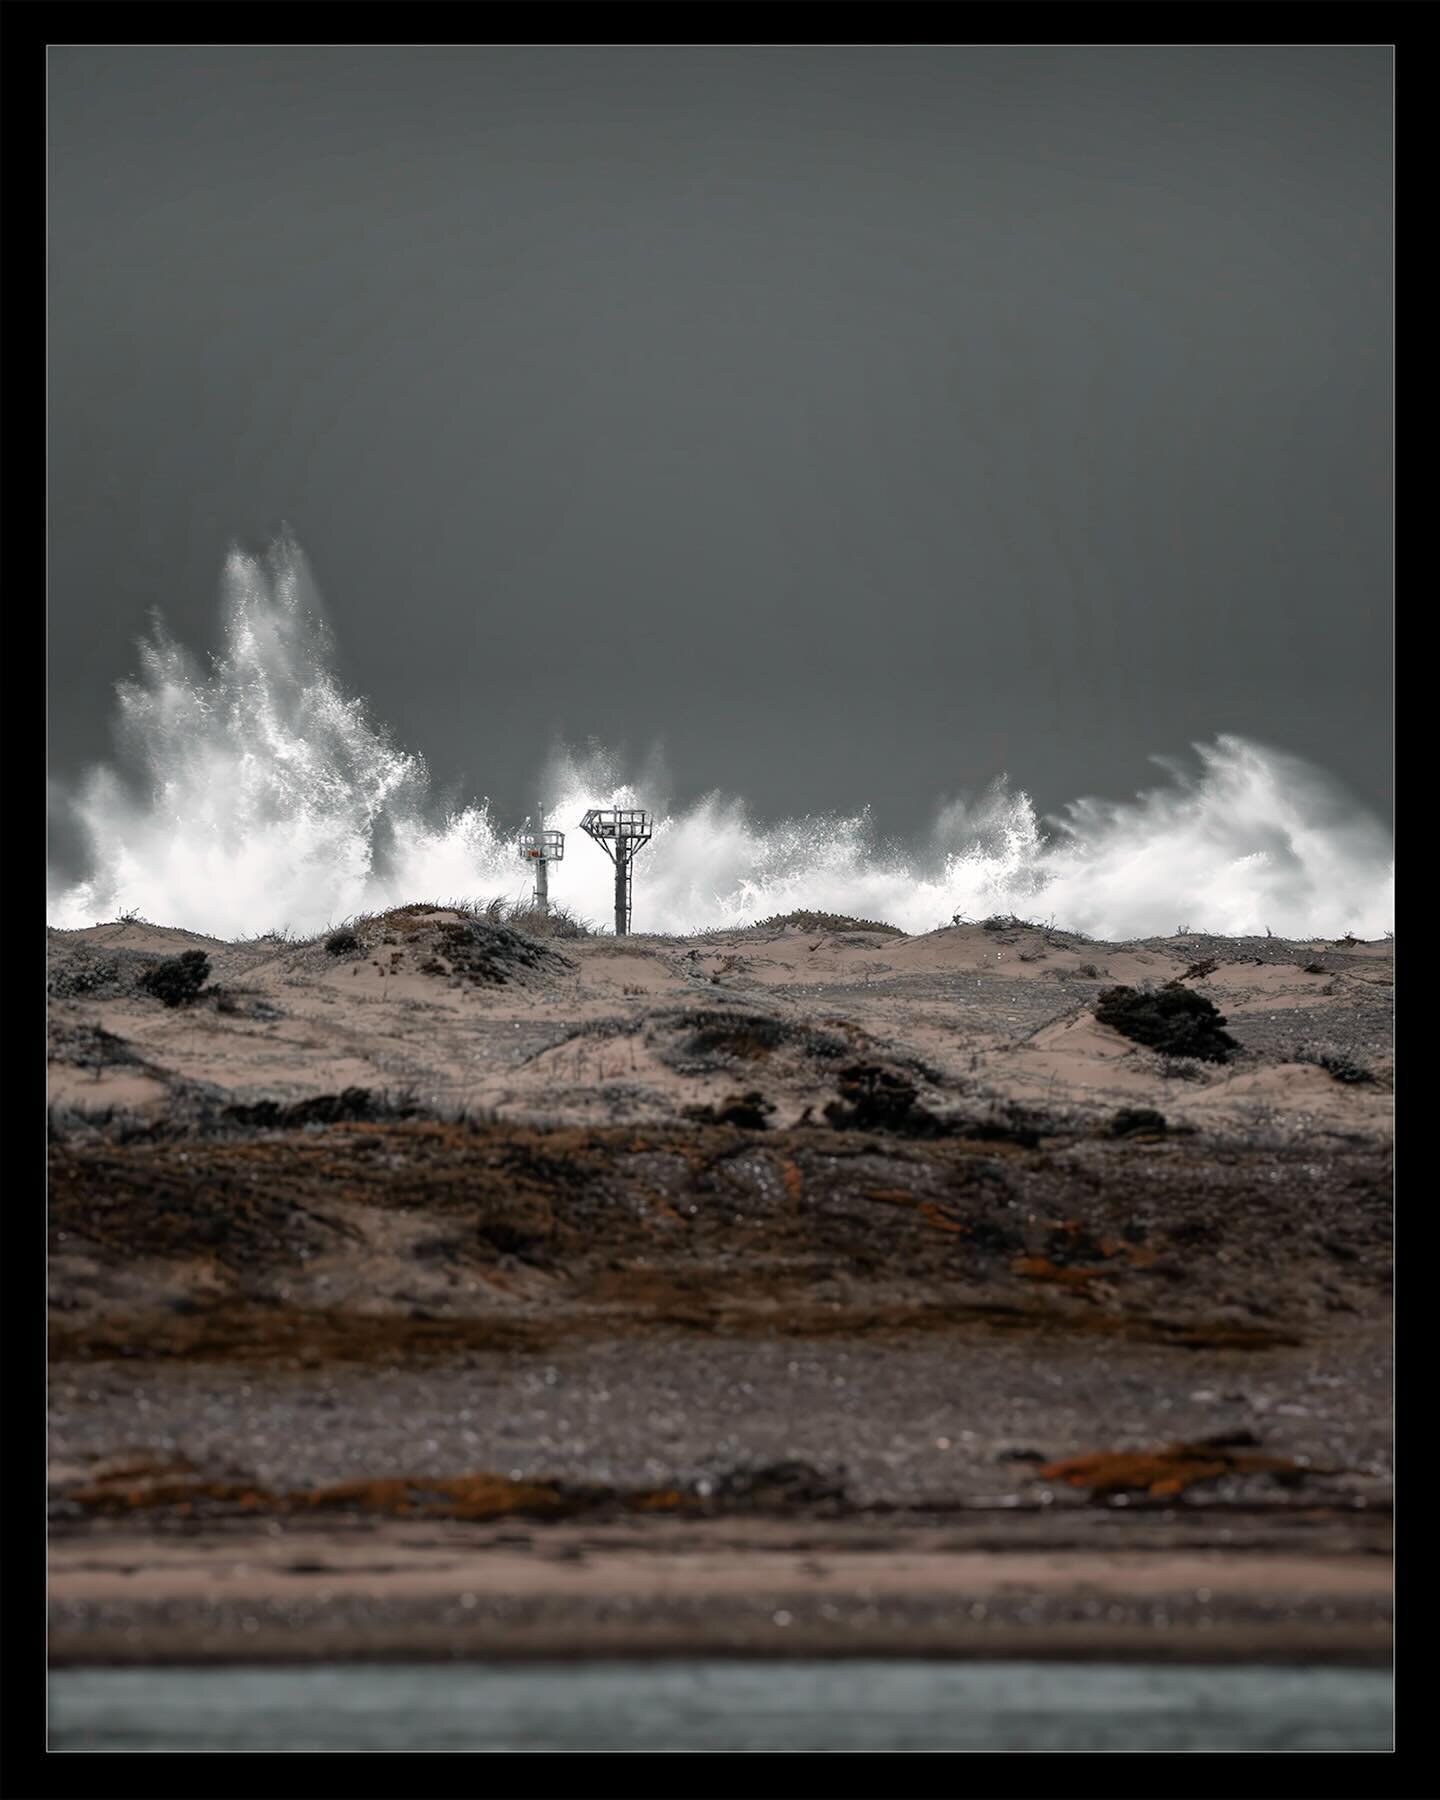 Wavebreak | #morrobay 

#morrobayca #jetty #highsurf #surfphotography #bigwaves #hugewaves #hightide #morrobayrock #morrobayharbor #sanddunes #centralcoast #moodyedits #cencal #california #californialove #ourgoldenstate #goldenstate #slo #rawcommunit